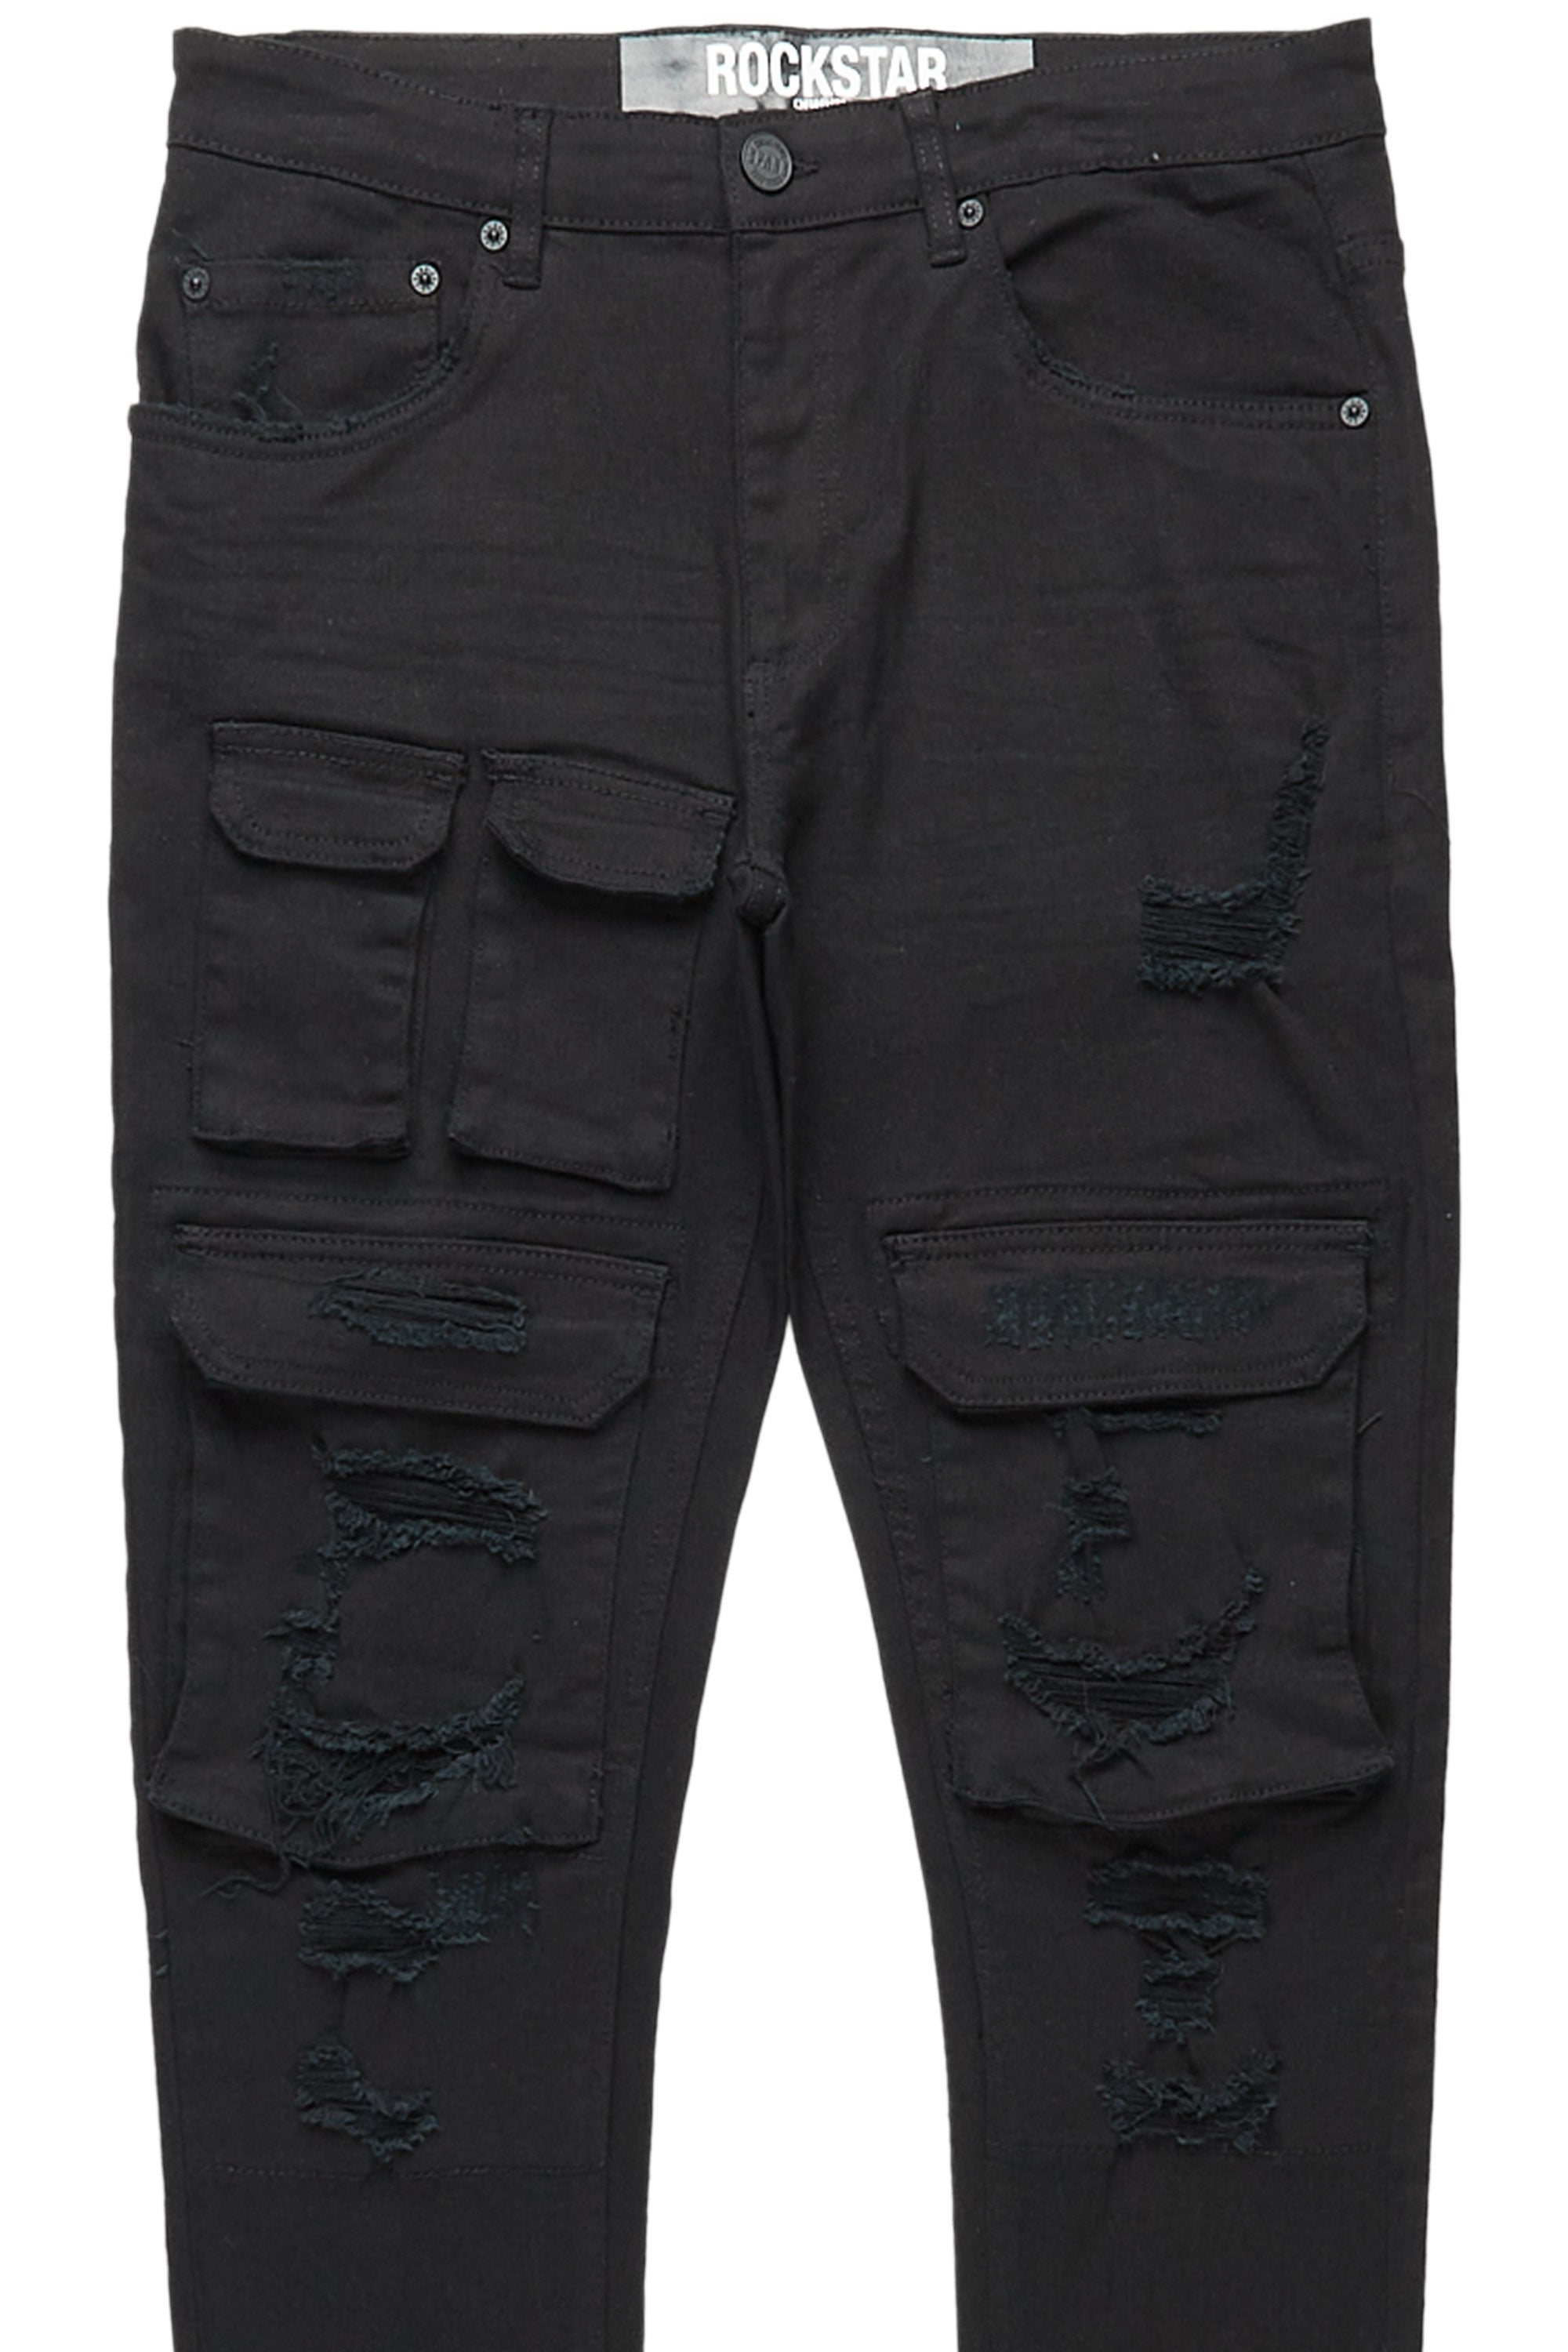 Yaso Black Cargo Jean